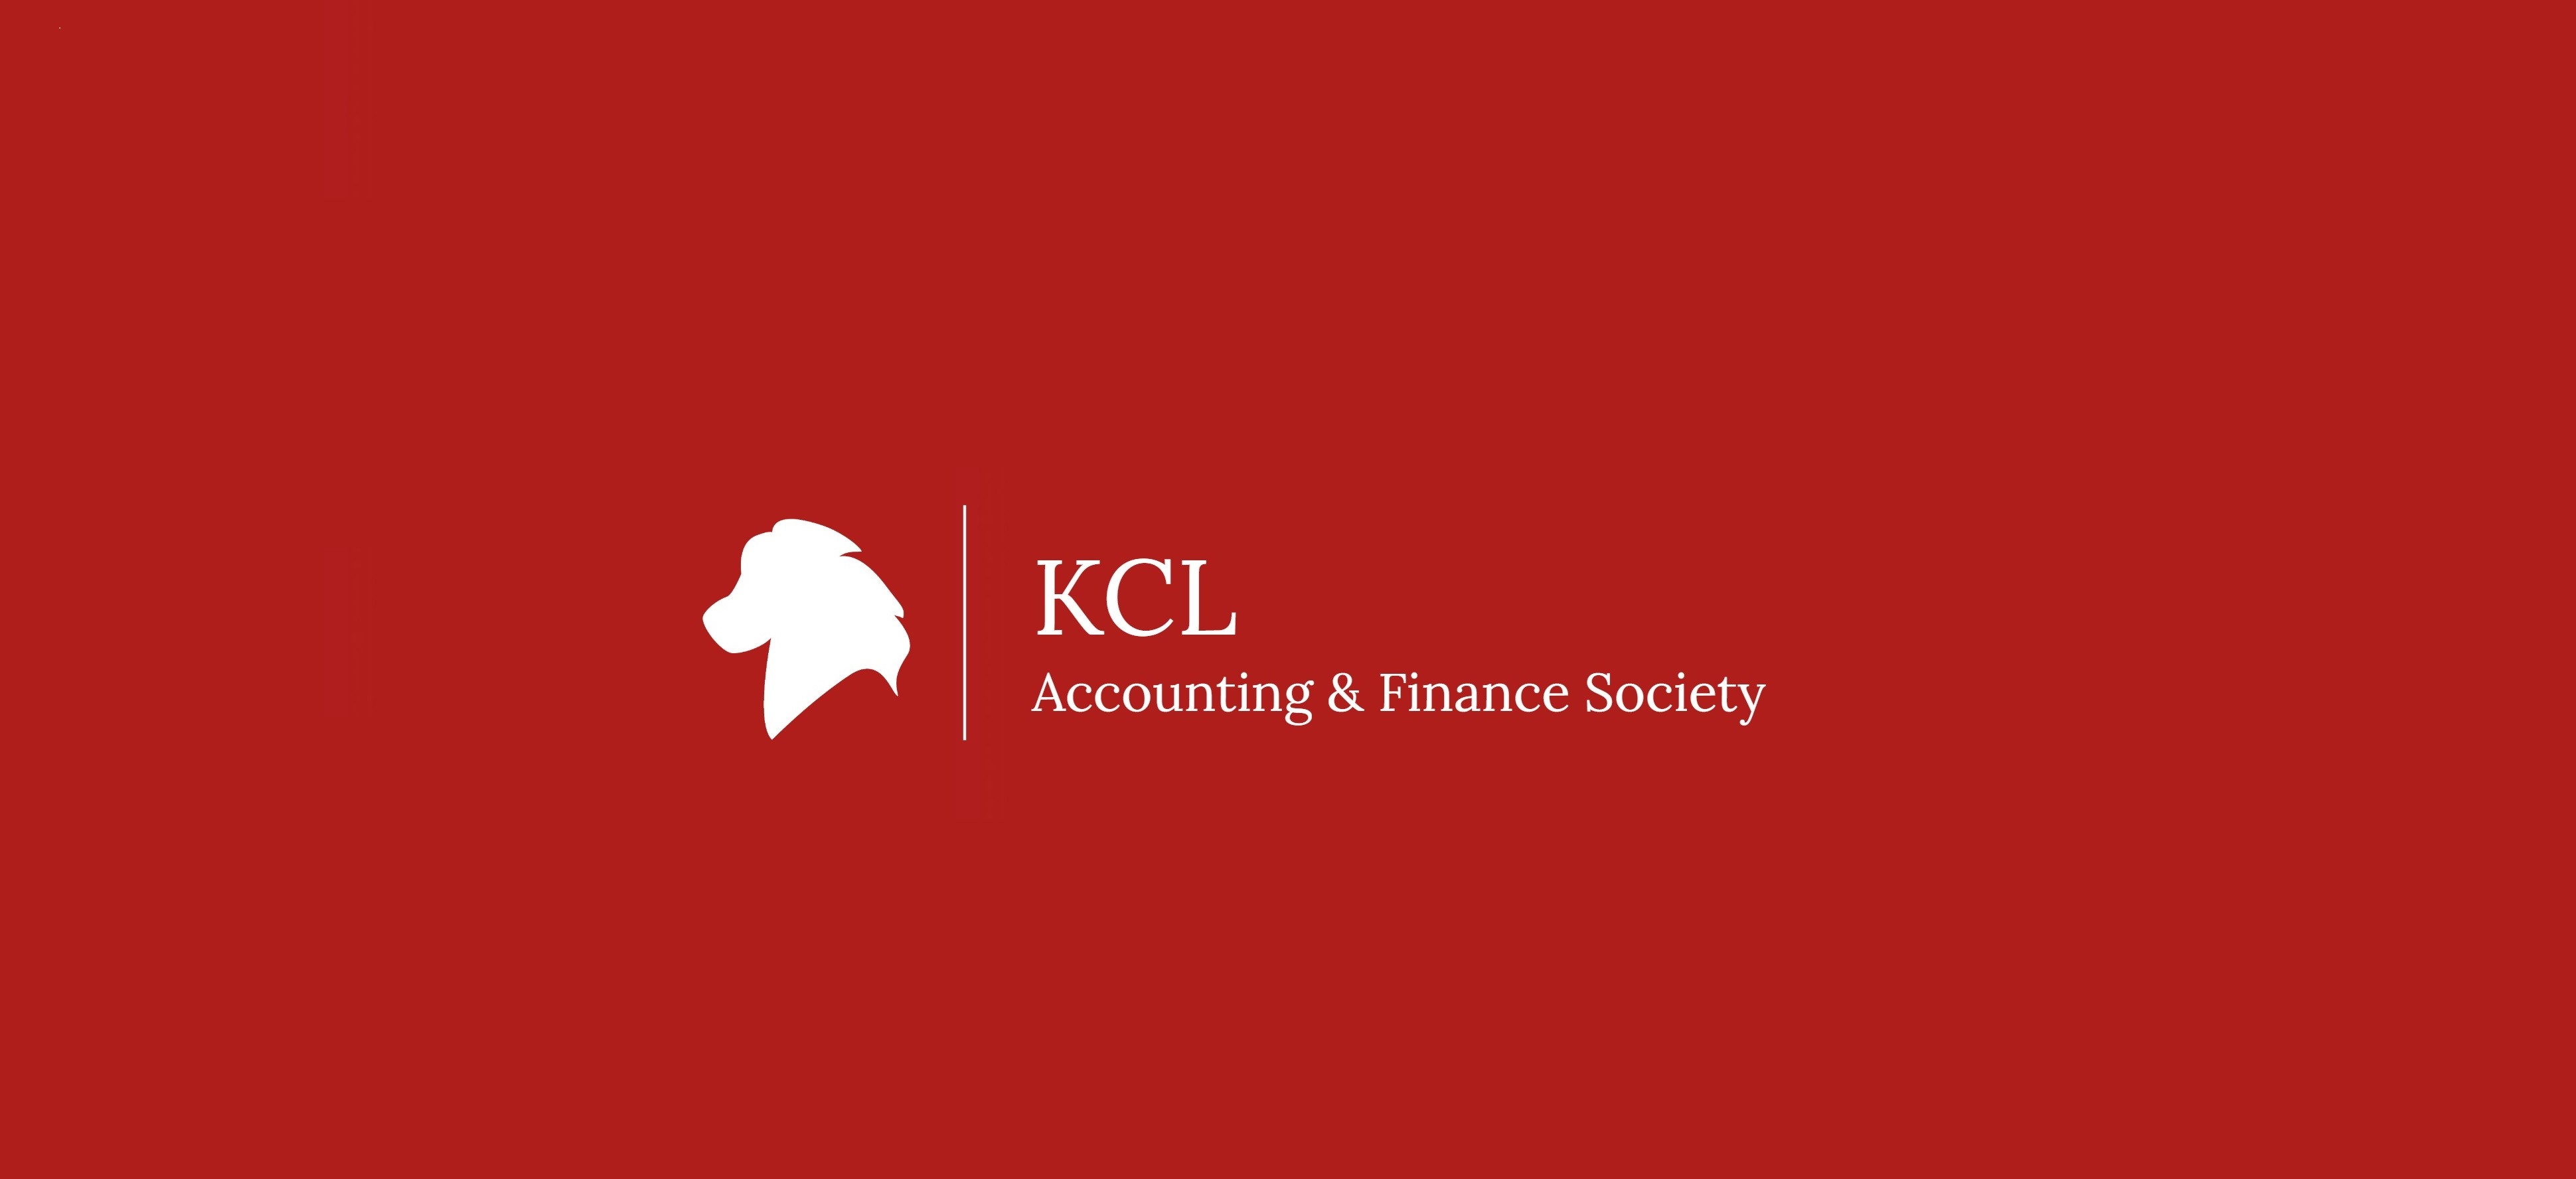 Accounting & Finance society